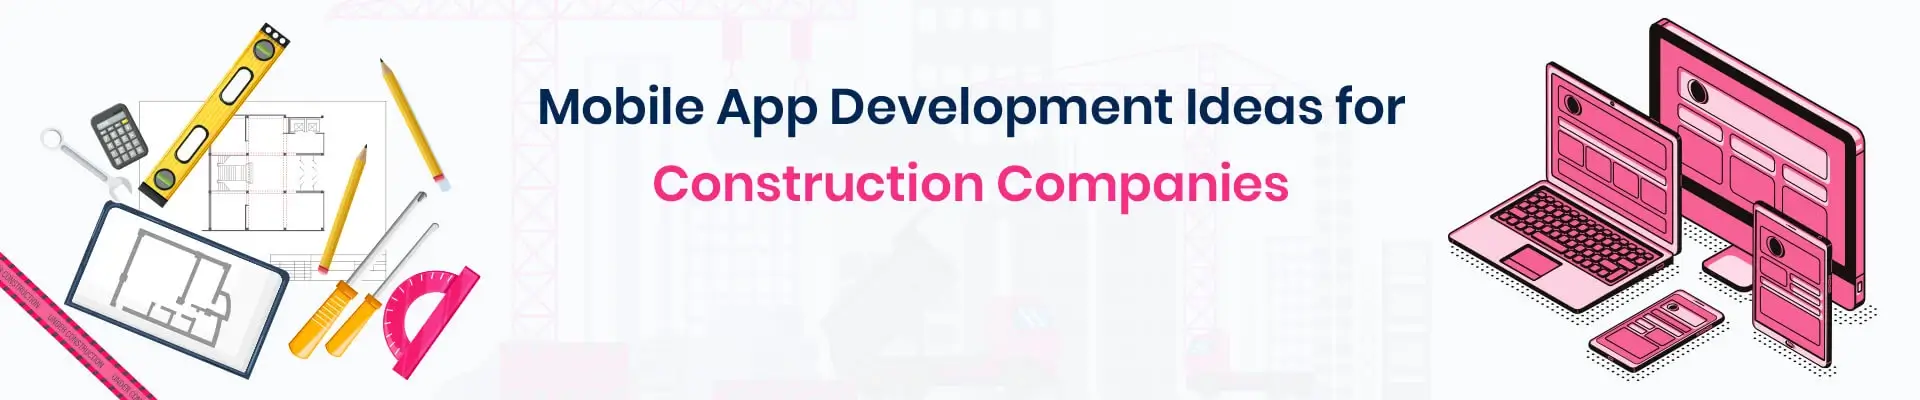 Best Construction App Development Ideas for Construction Companies